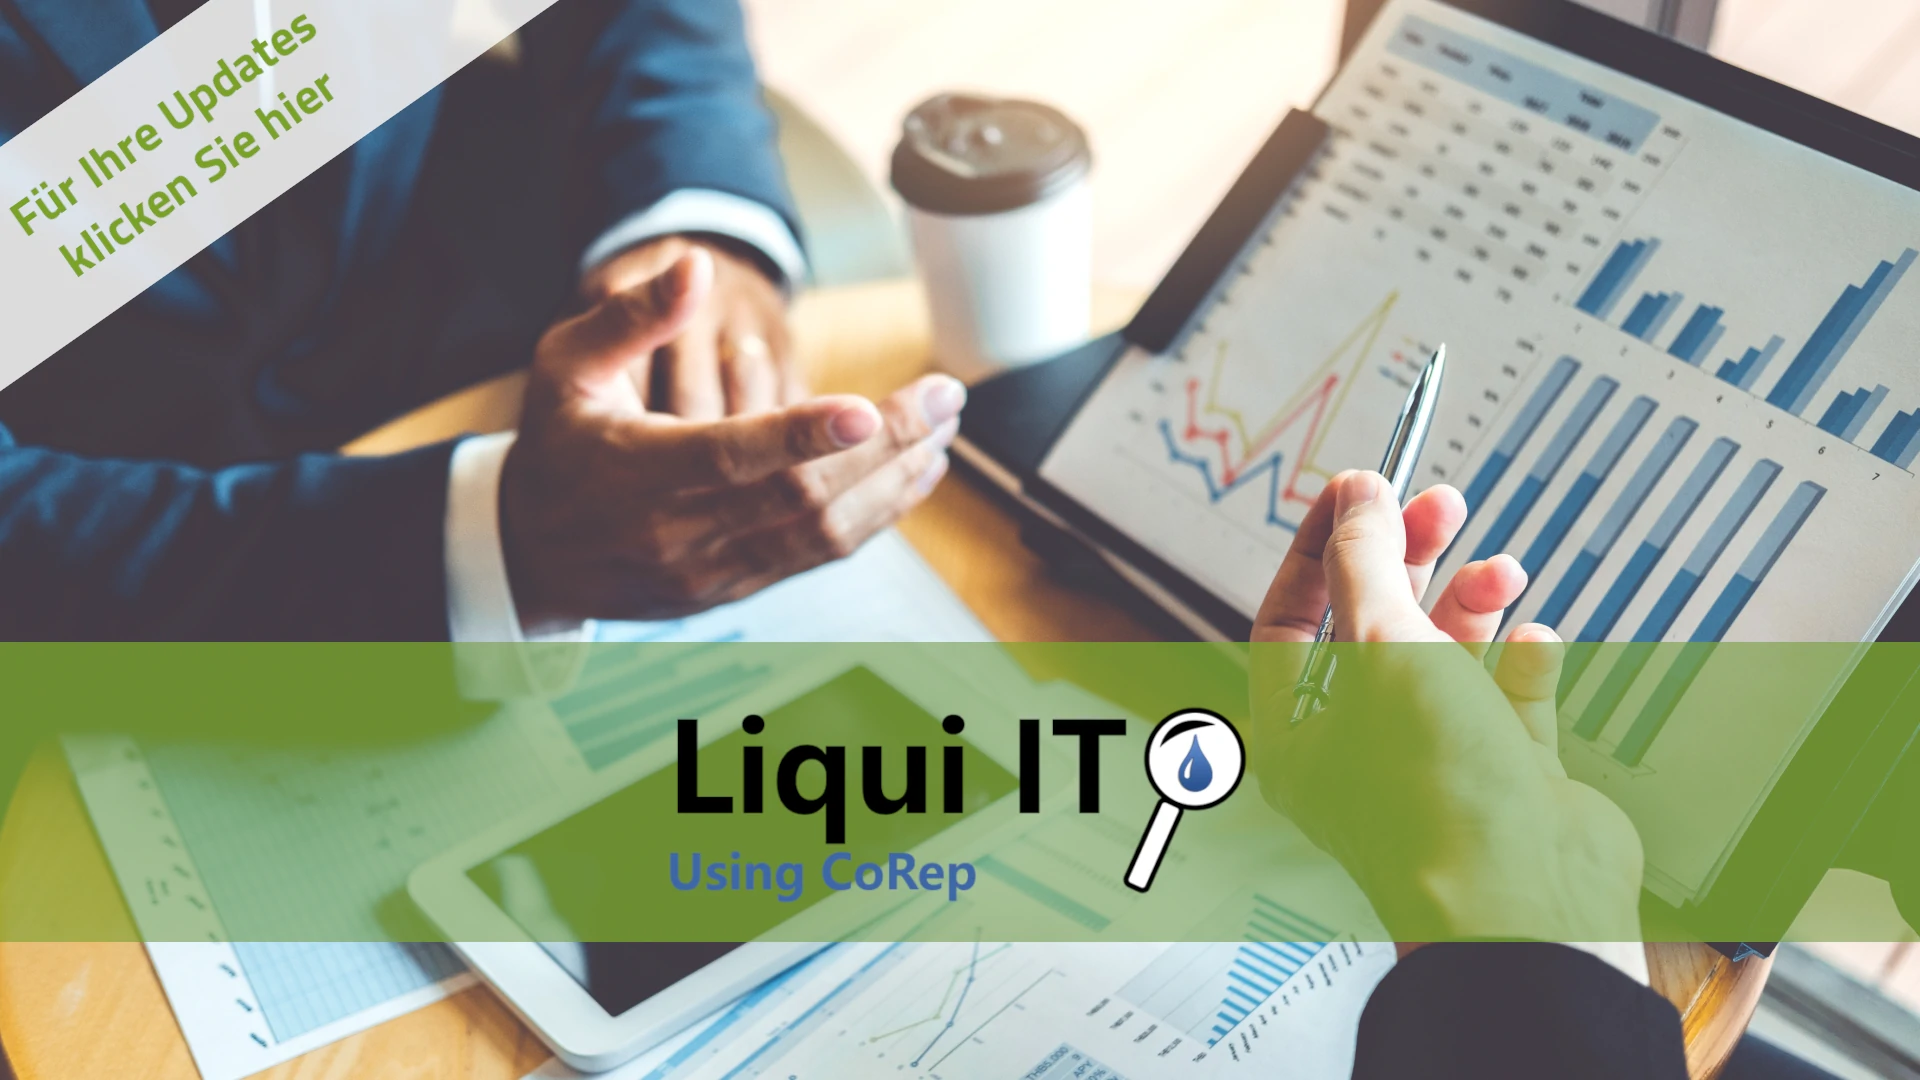 Liqui IT GmbH